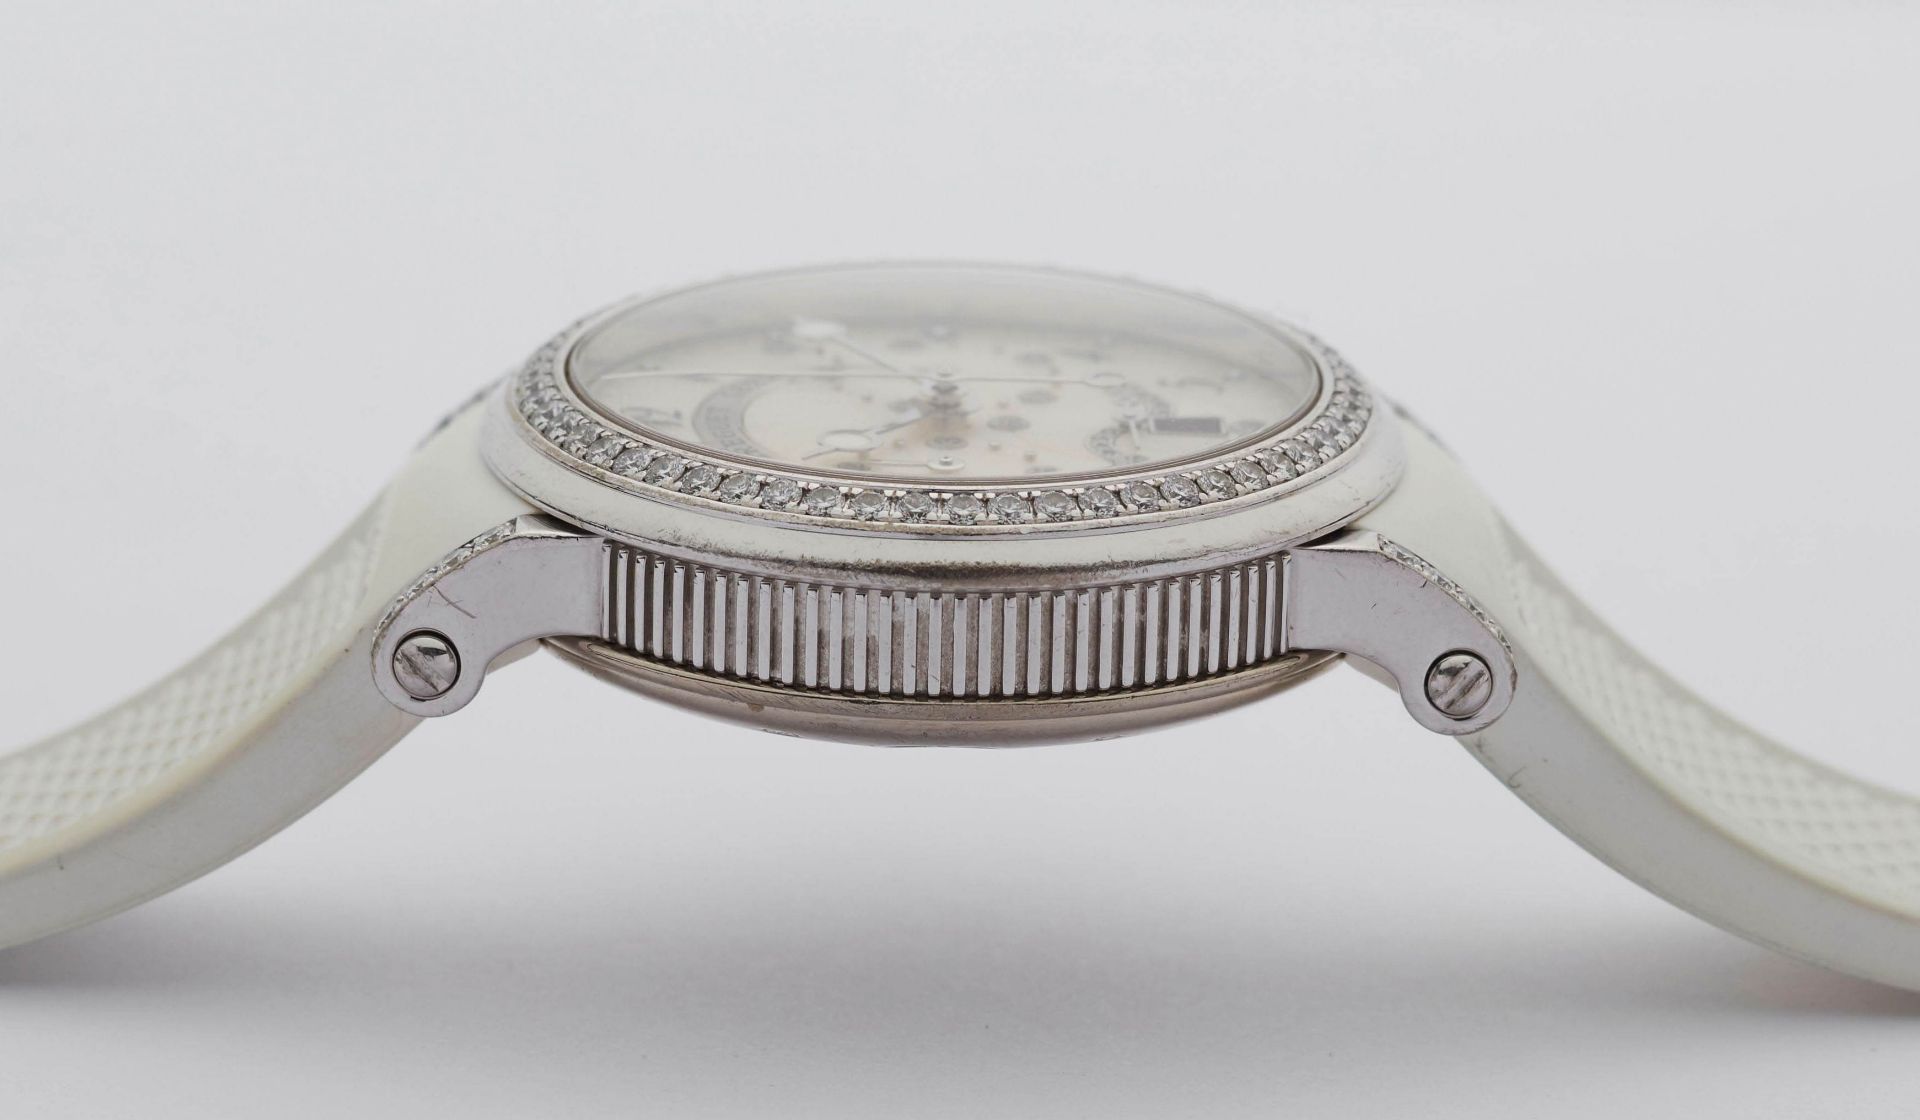 Breguet, "Marine Chronograph" set with diamonds, 2012. - Image 4 of 4